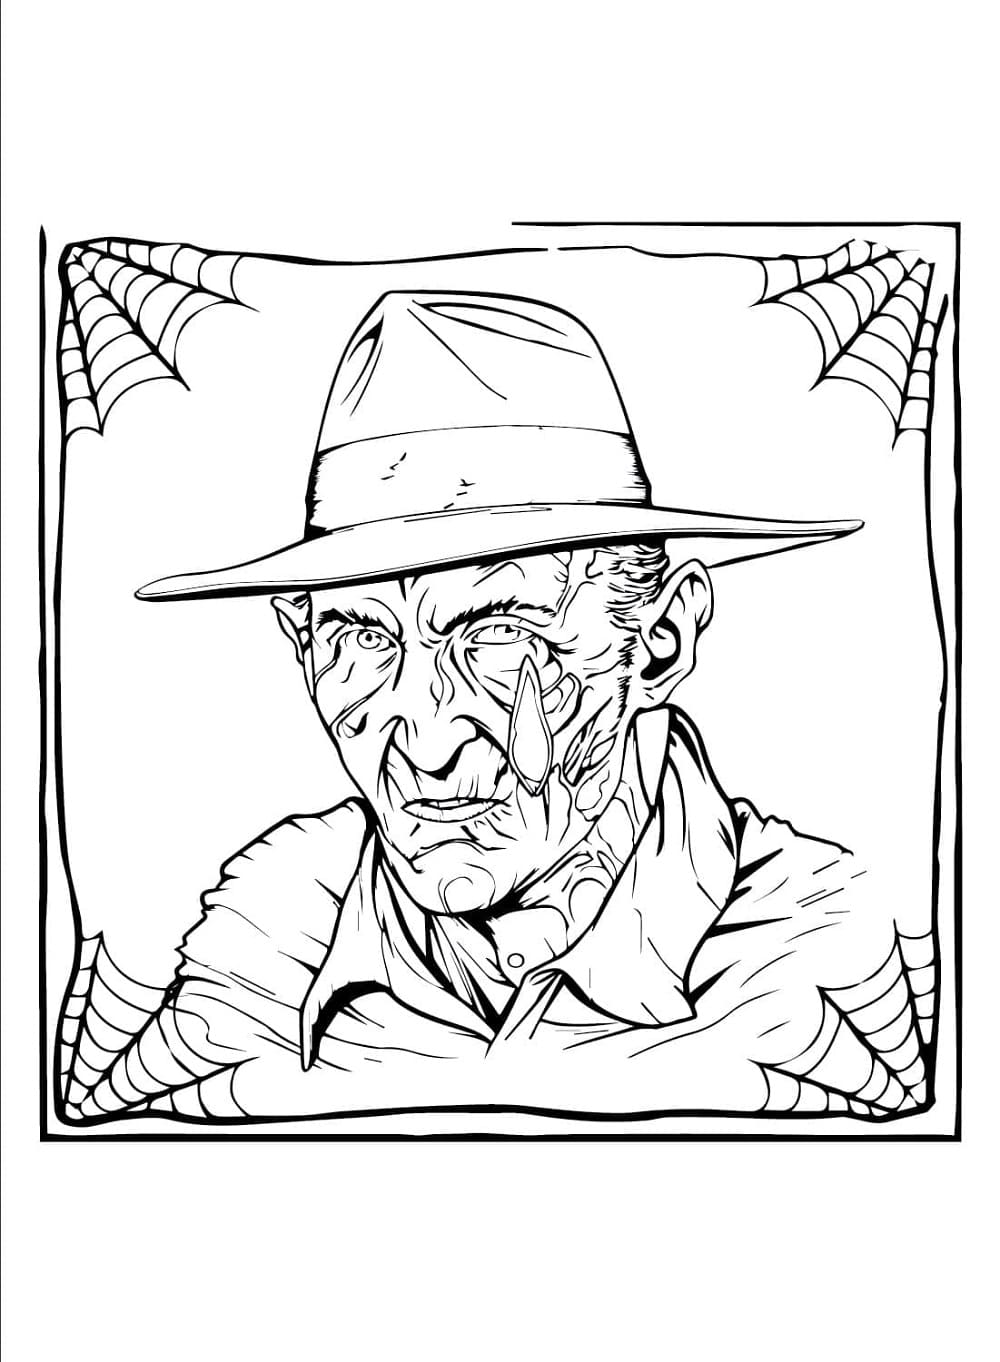 Printable Freddy Krueger Image Coloring Page